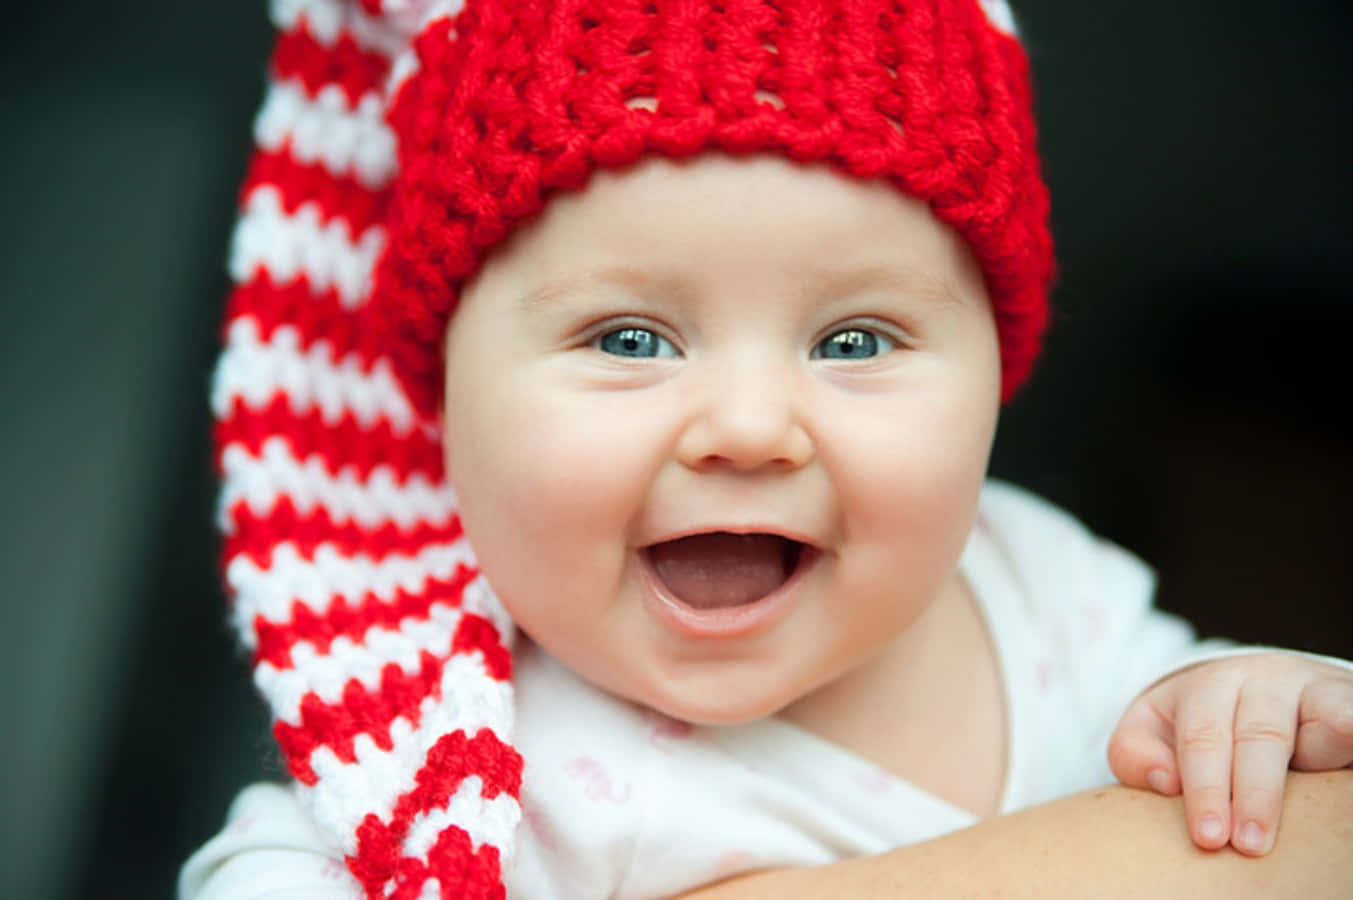 HD wallpaper: baby smiling, smile, child, mladenec, cute, blanket, towel,  childhood | Wallpaper Flare